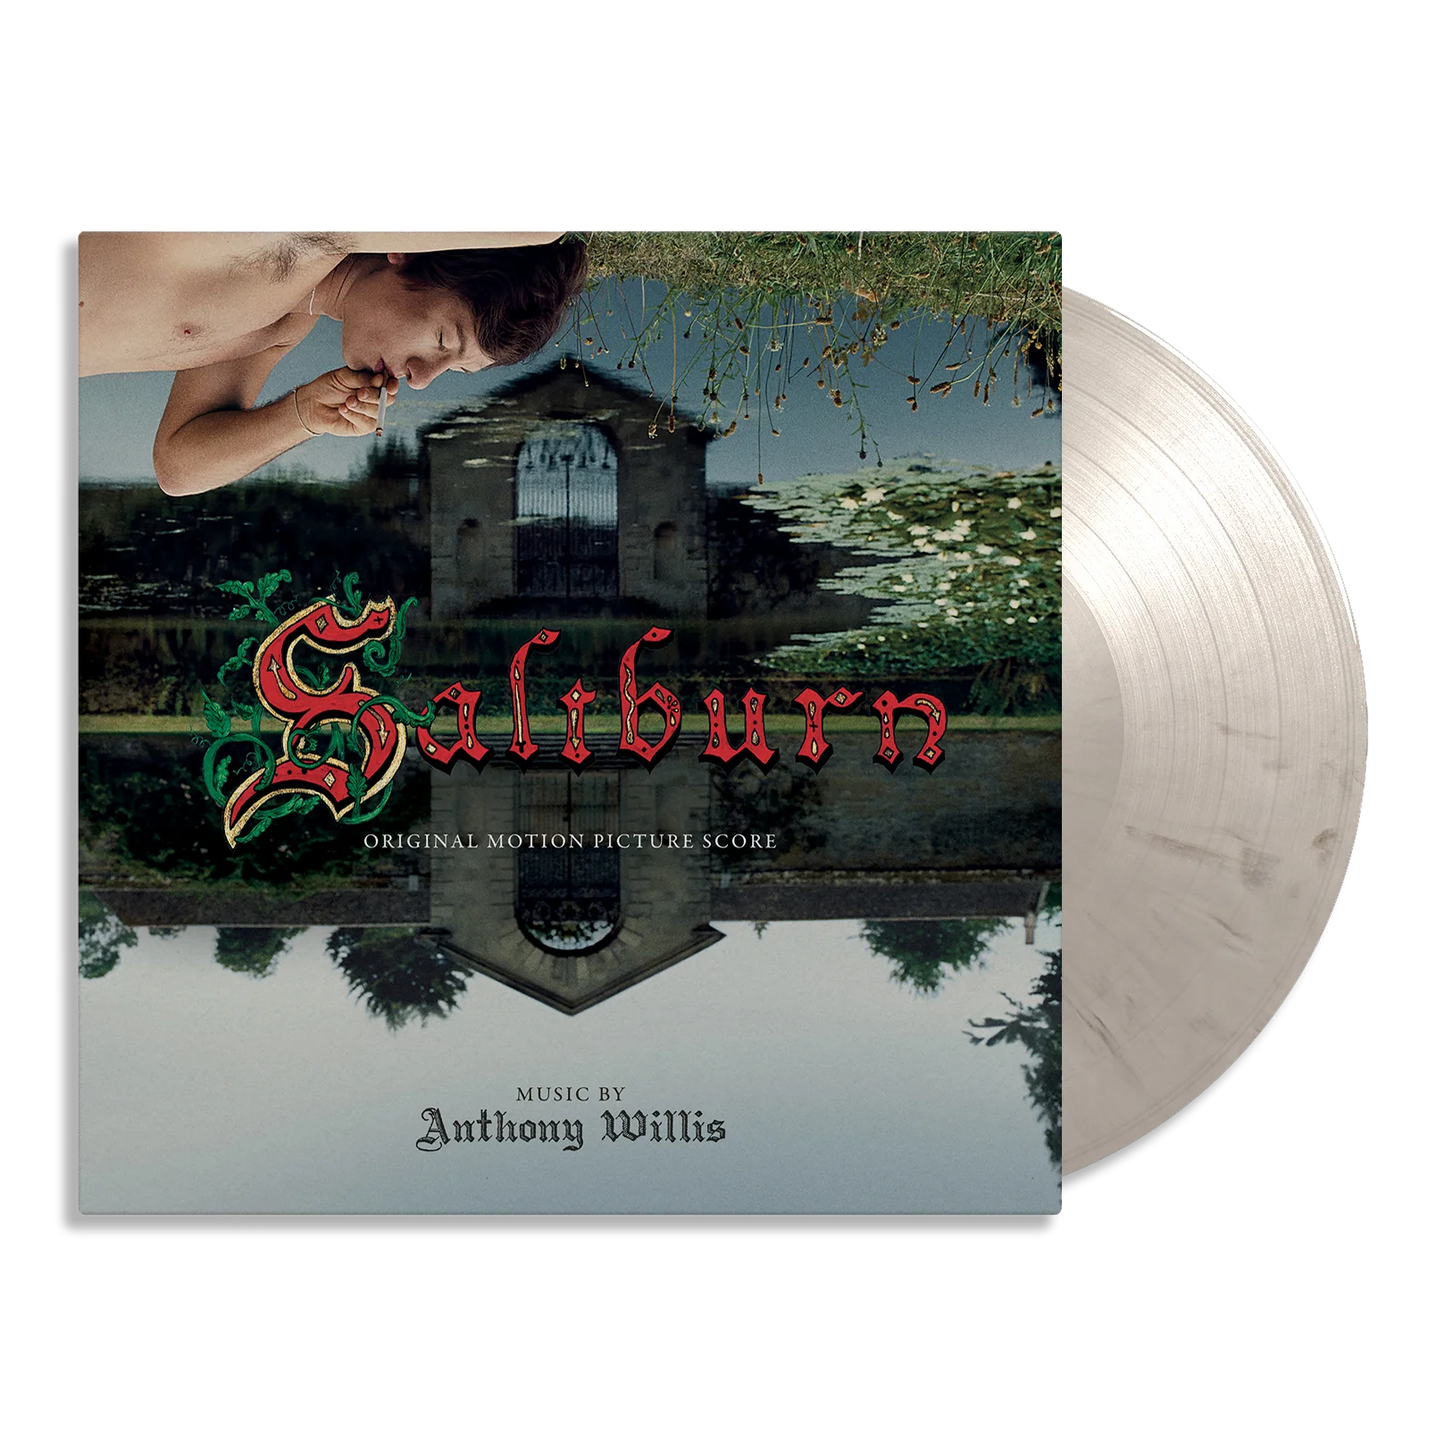 Anthony Willis - Saltburn (Original Motion Picture Score) LP